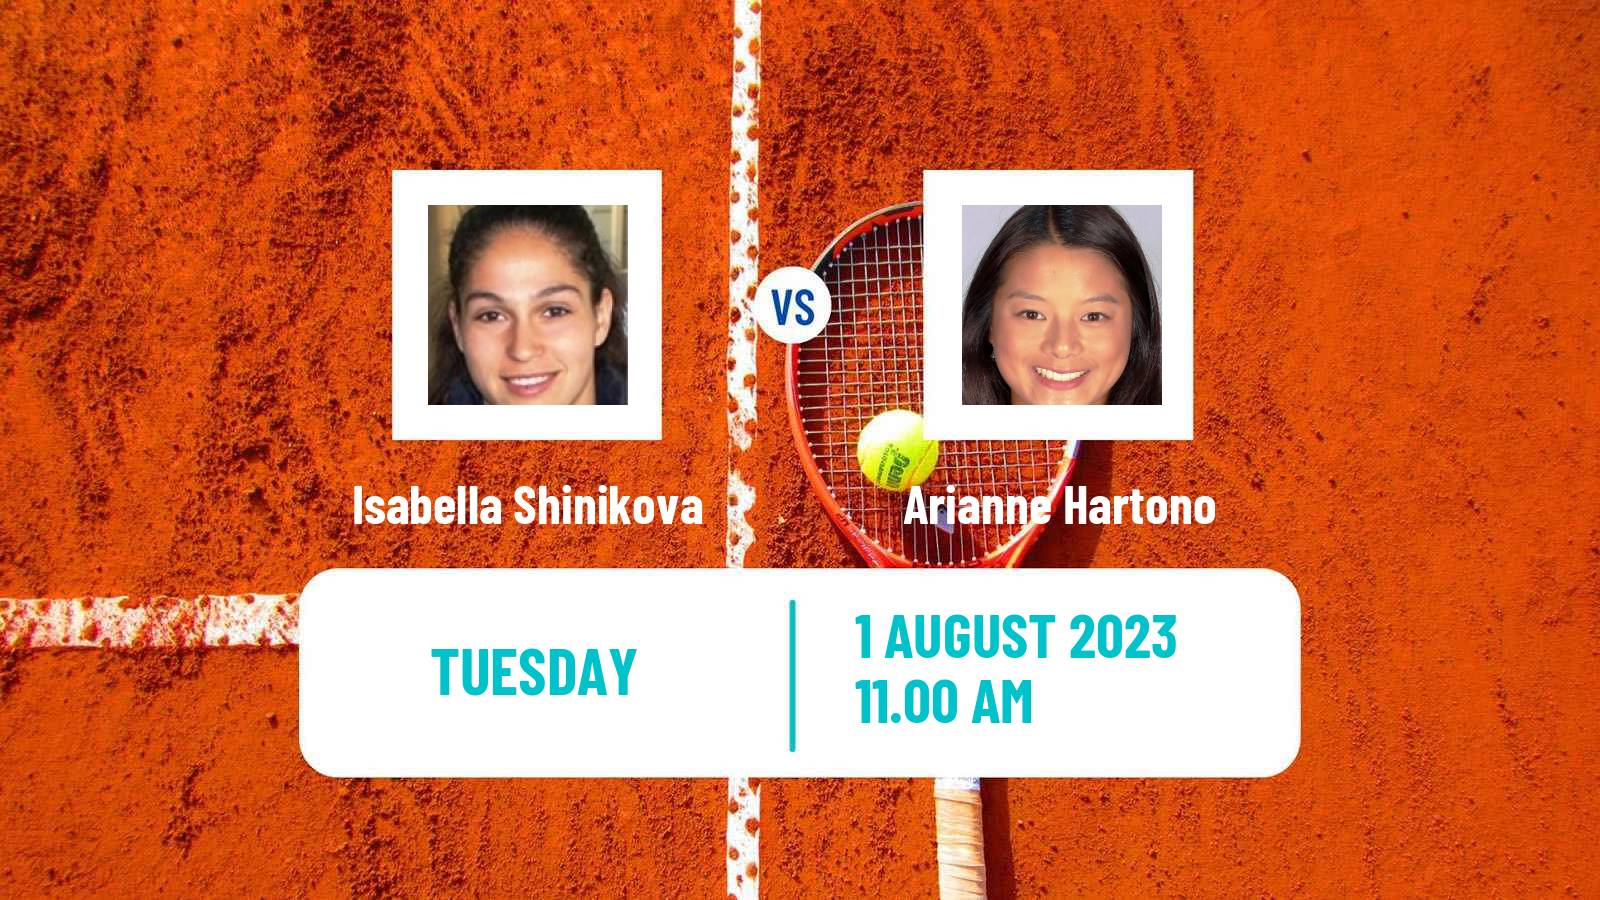 Tennis ITF W60 Barcelona Women Isabella Shinikova - Arianne Hartono